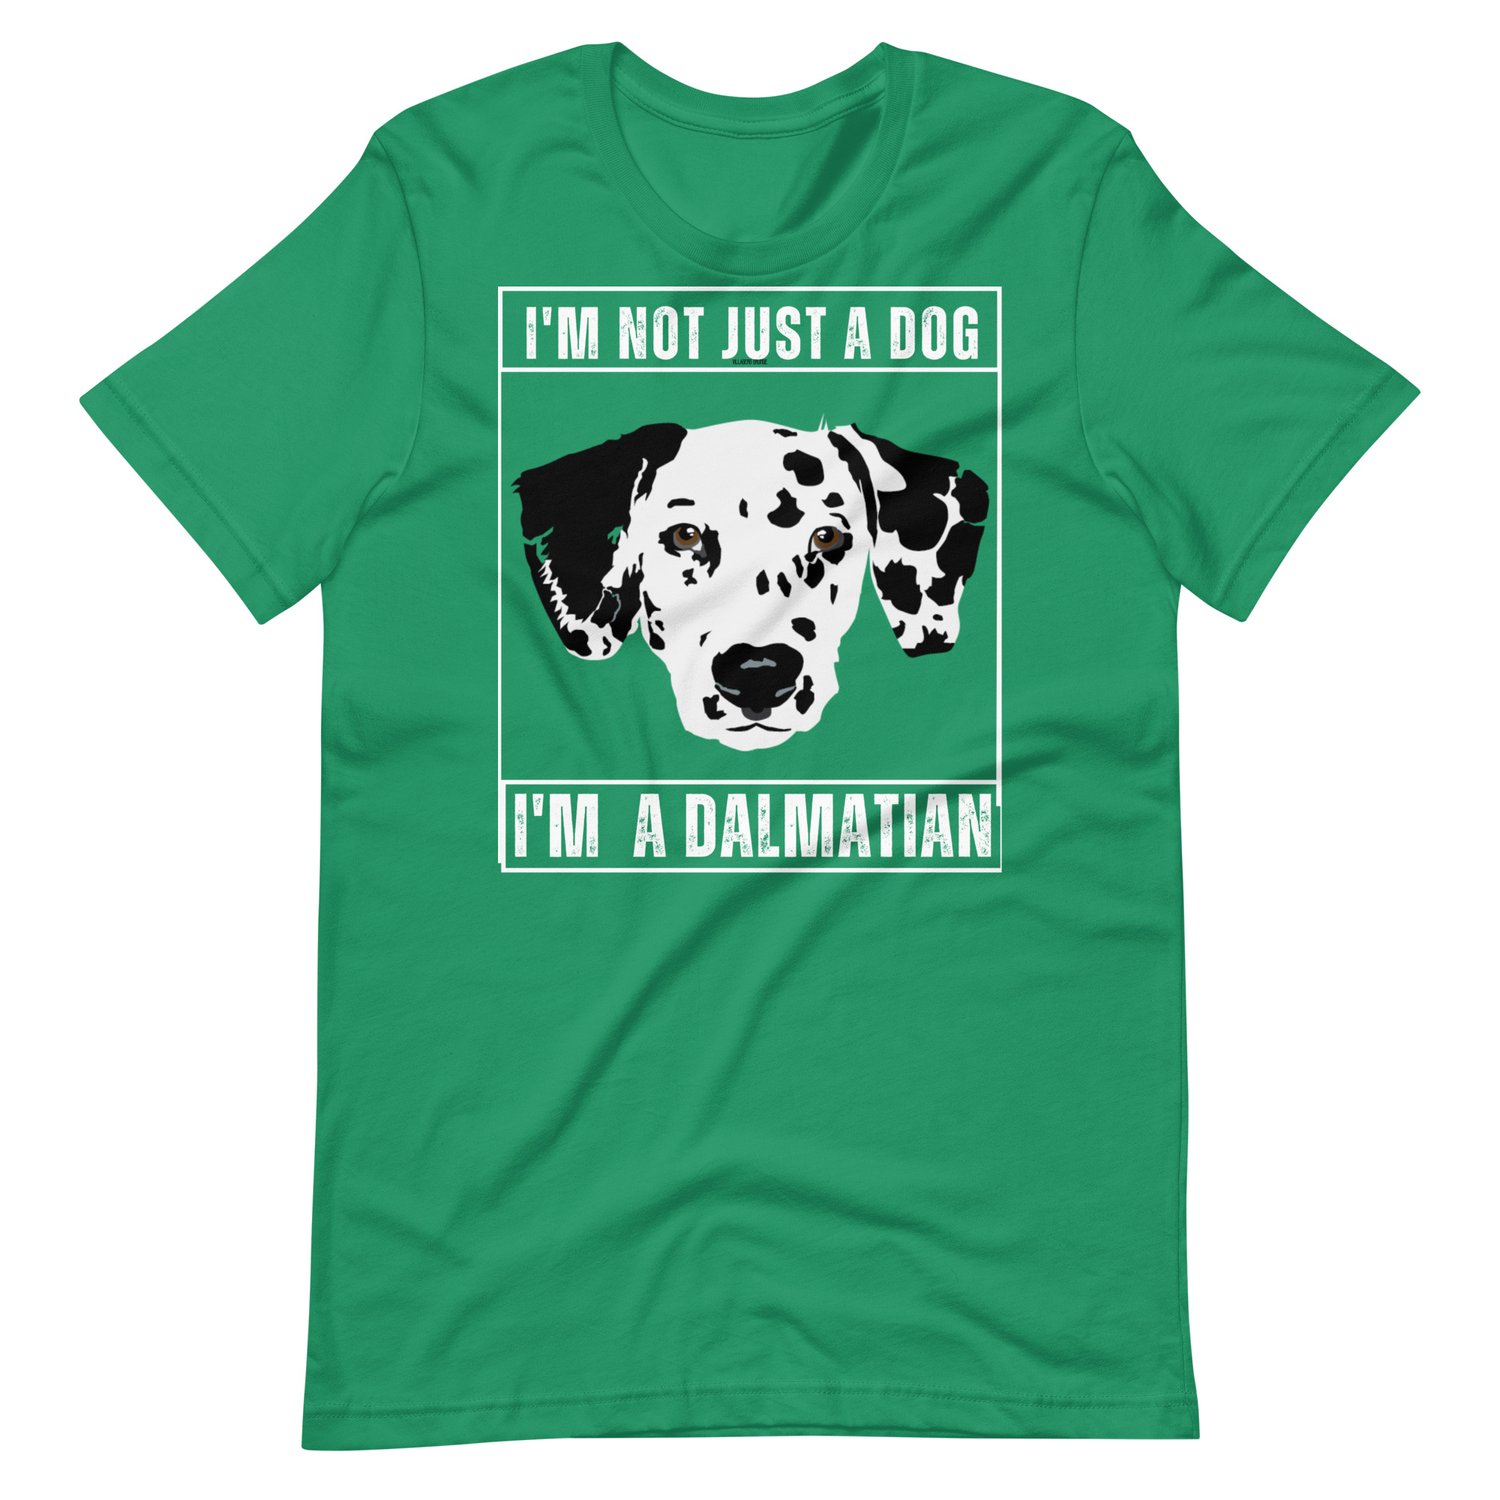 Pretend I'm A Dalmatian shirt Essential T-Shirt for Sale by SHOP MDB